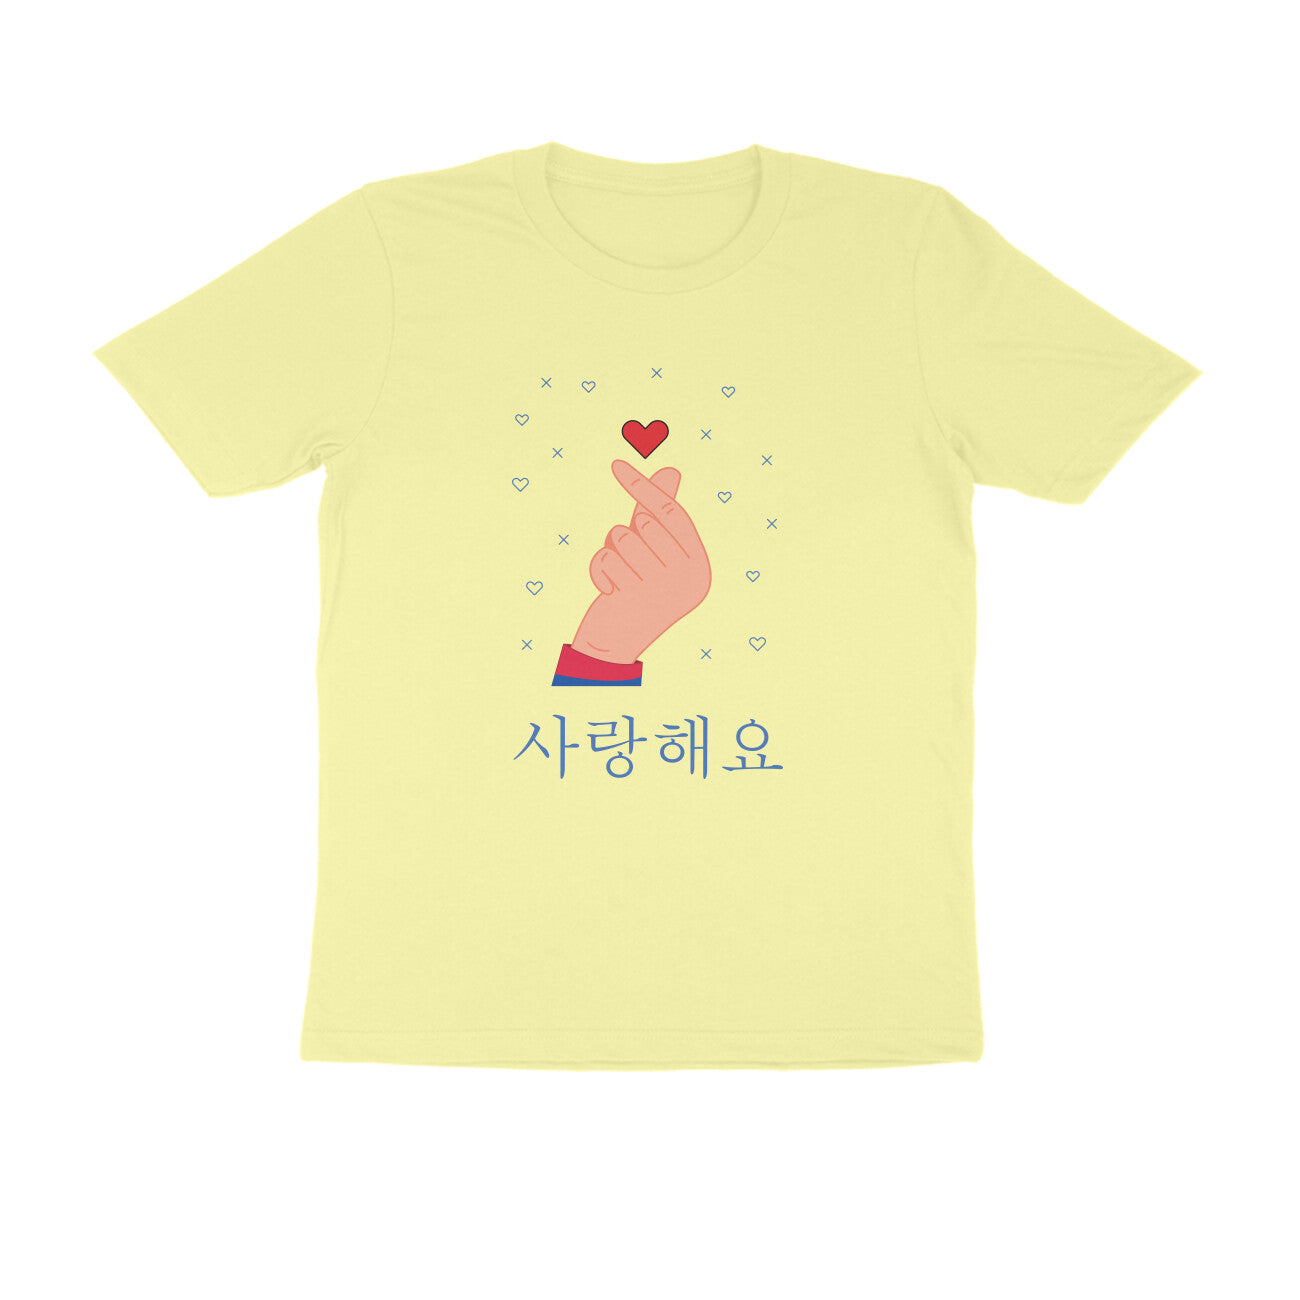 Half-Sleeve Round Neck T-Shirt – Korean – saranghaeyo - I love you 1